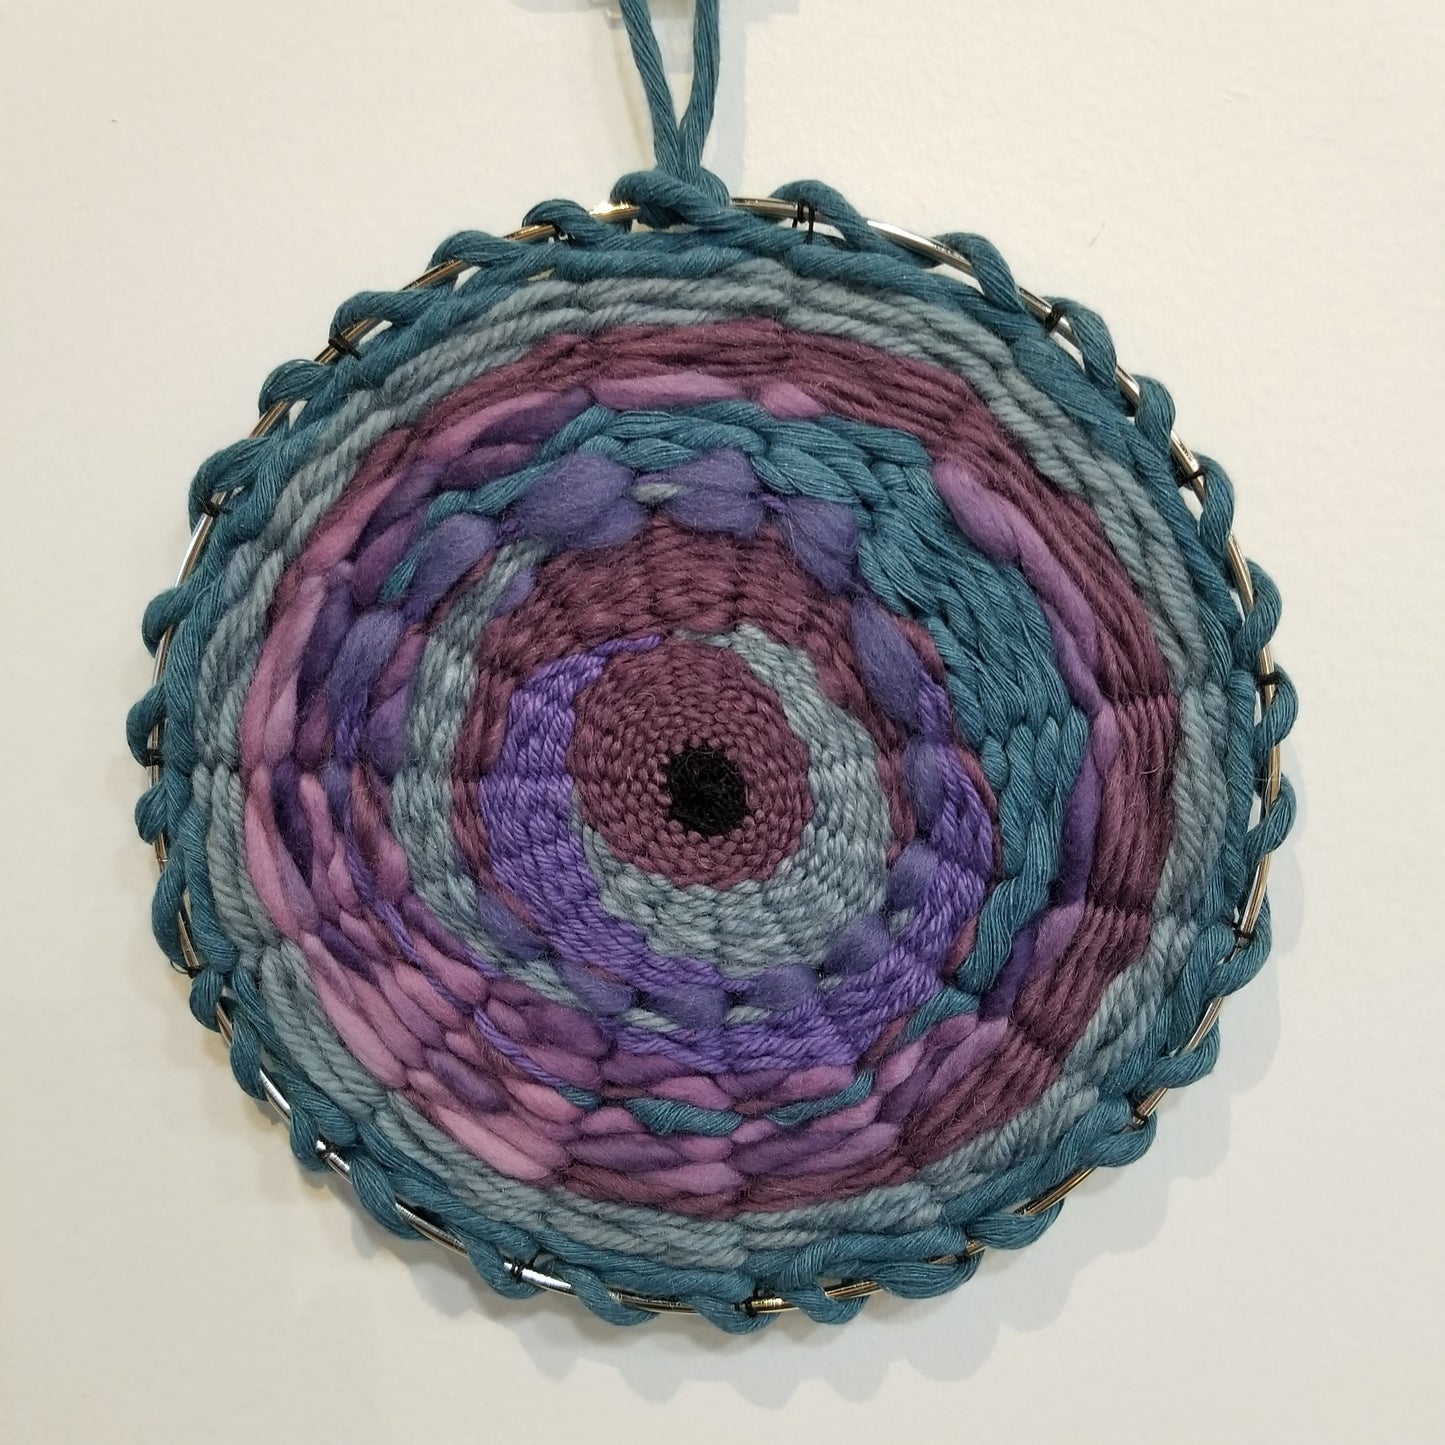 Beginner Circle Weaving - May 23